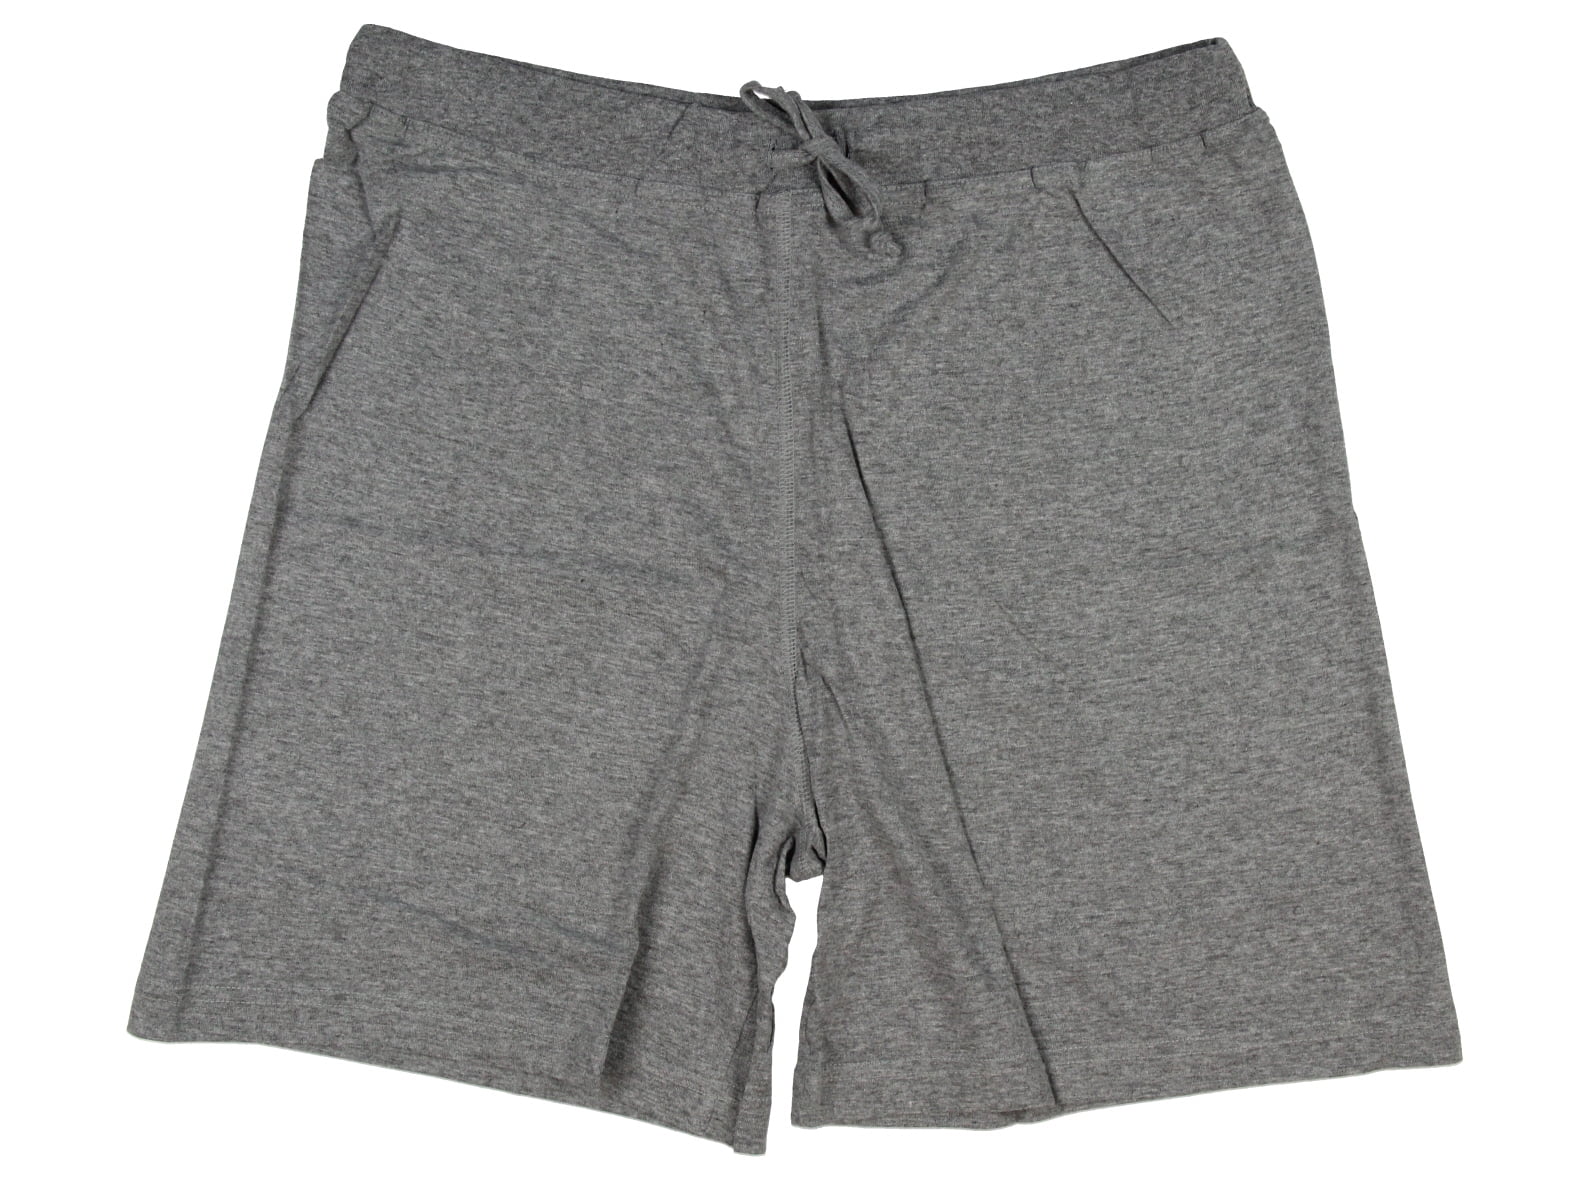 Intimo Men's Grey Pajama Short Jam Shorts Large - Walmart.com